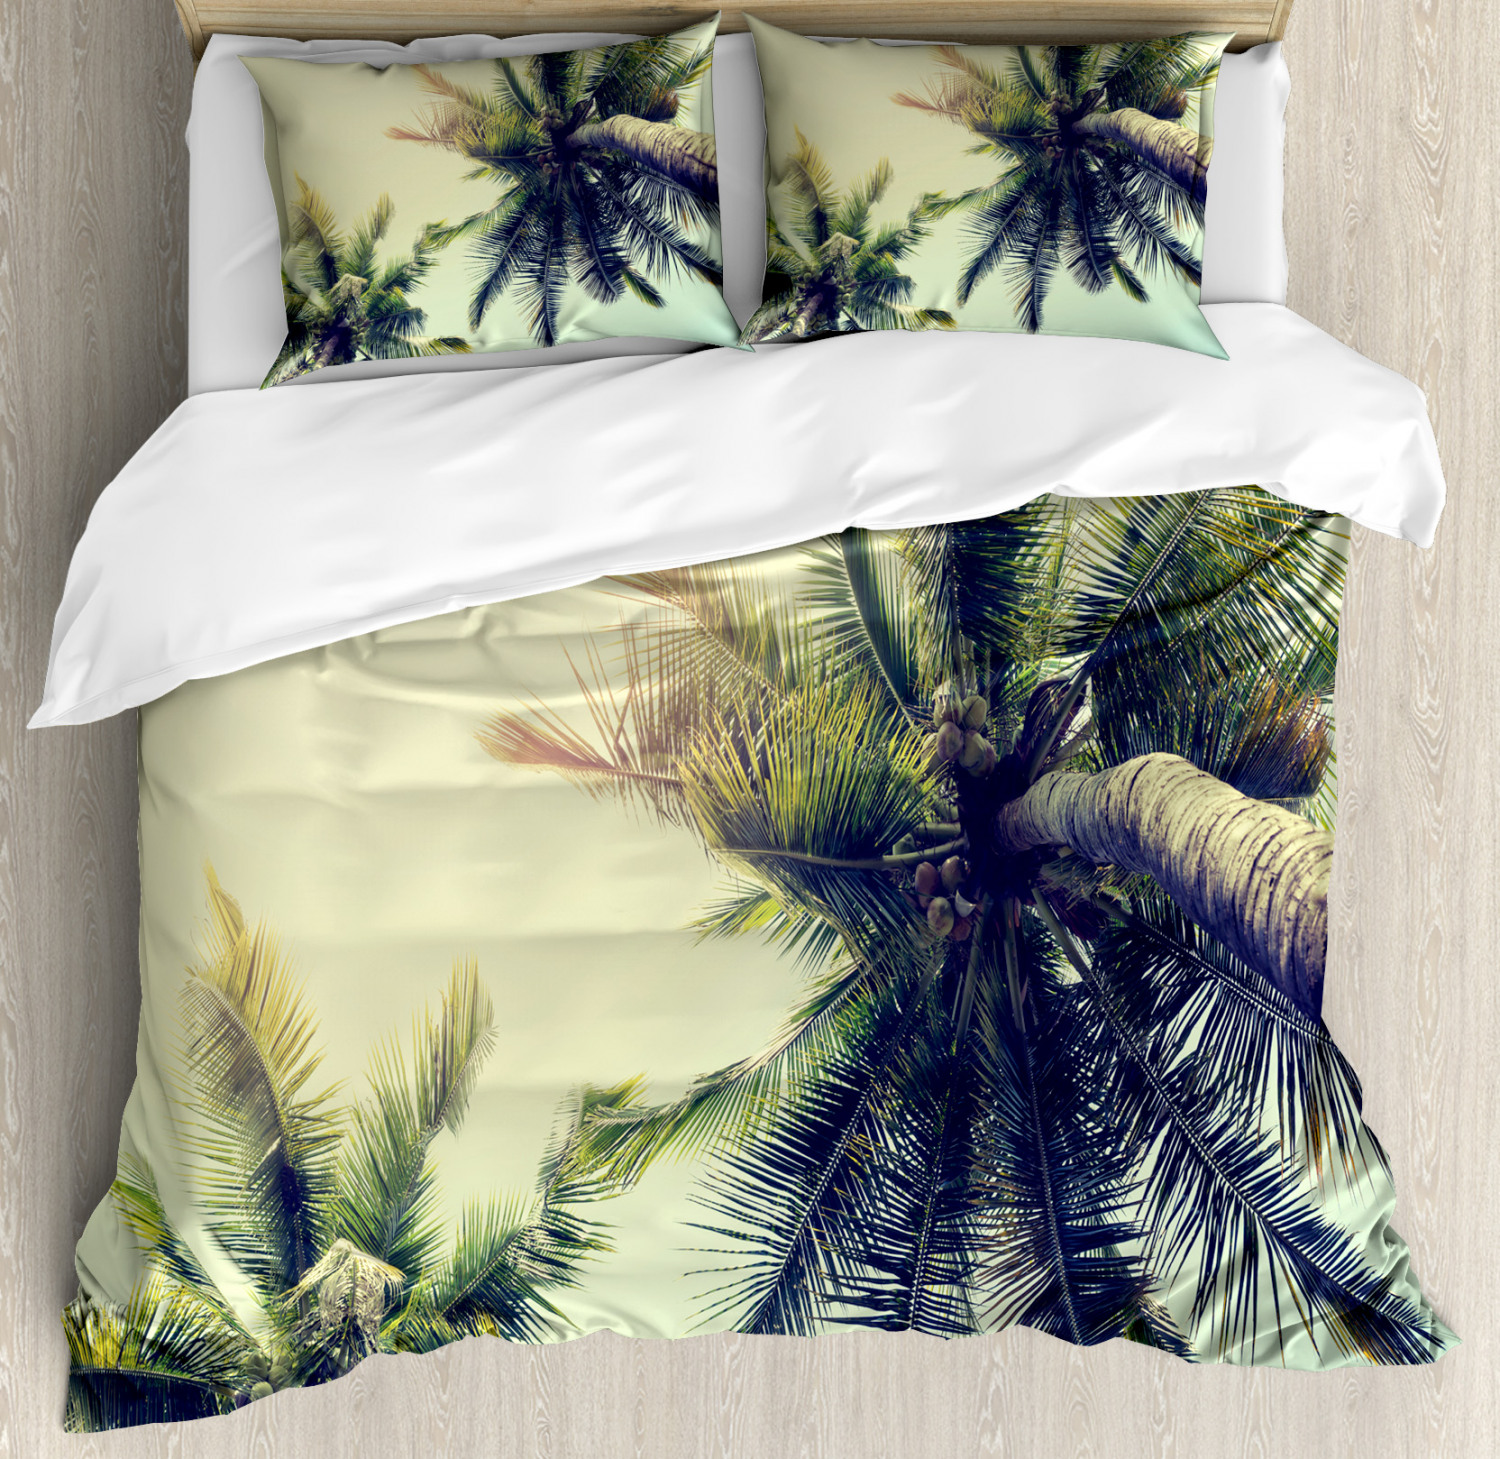 Palm Tree Duvet Cover Set With Pillow Shams Caribbean Coast